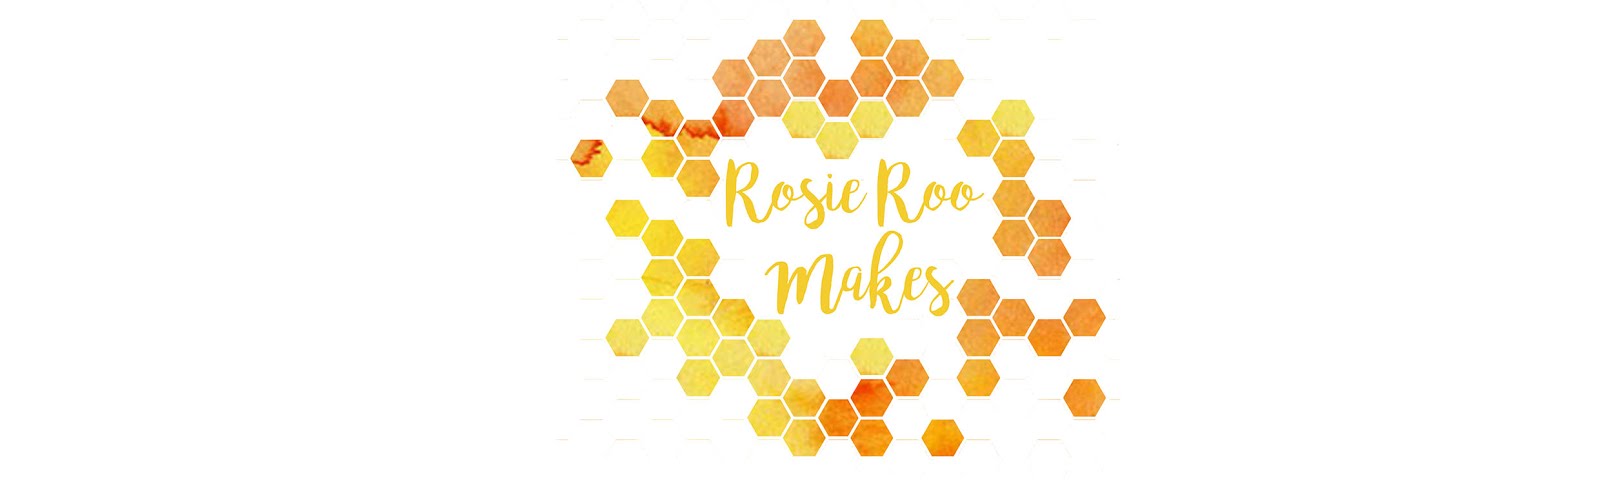 Rosie Roo Makes